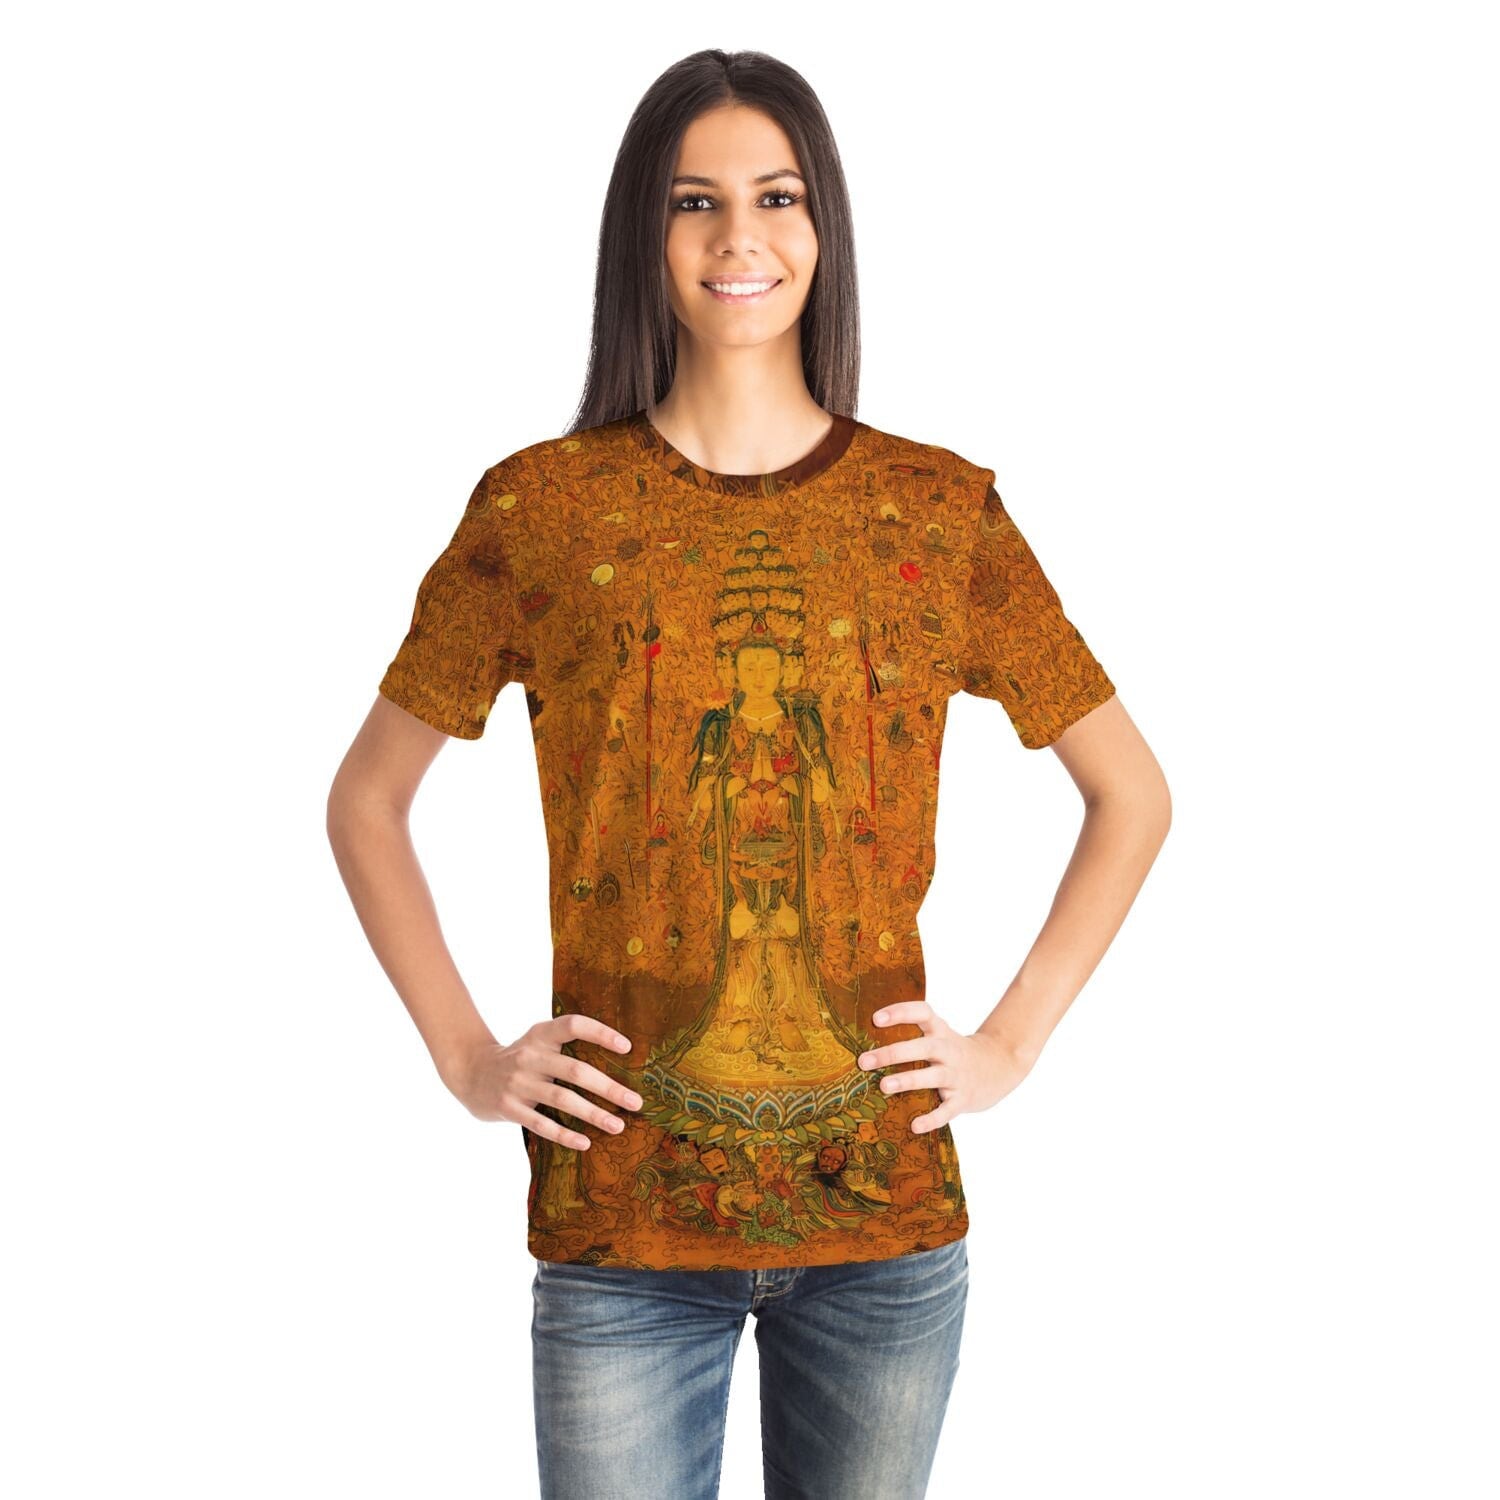 Guan Yin of a Thousand Arms and Eyes | Avalokiteshvara, Kannon | Buddhist Deity | Meditation Tee | Yoga Shirt | Graphic Art T-Shirt